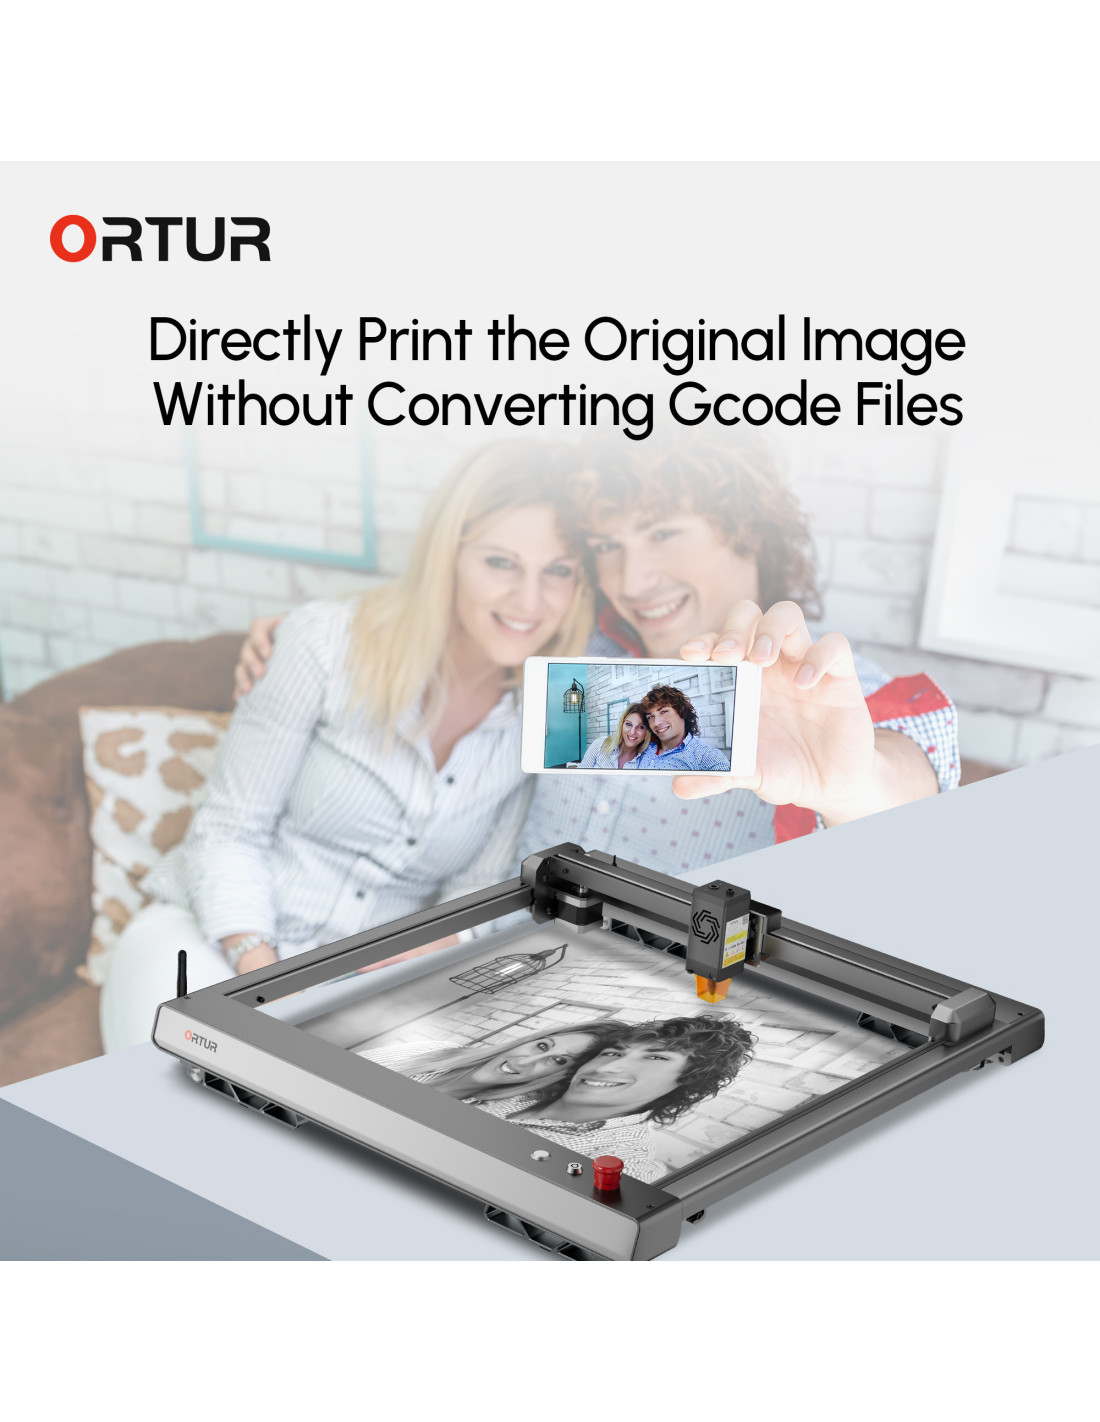 Ortur Laser Master 3 - Laser engraving and cutting machine - 10W